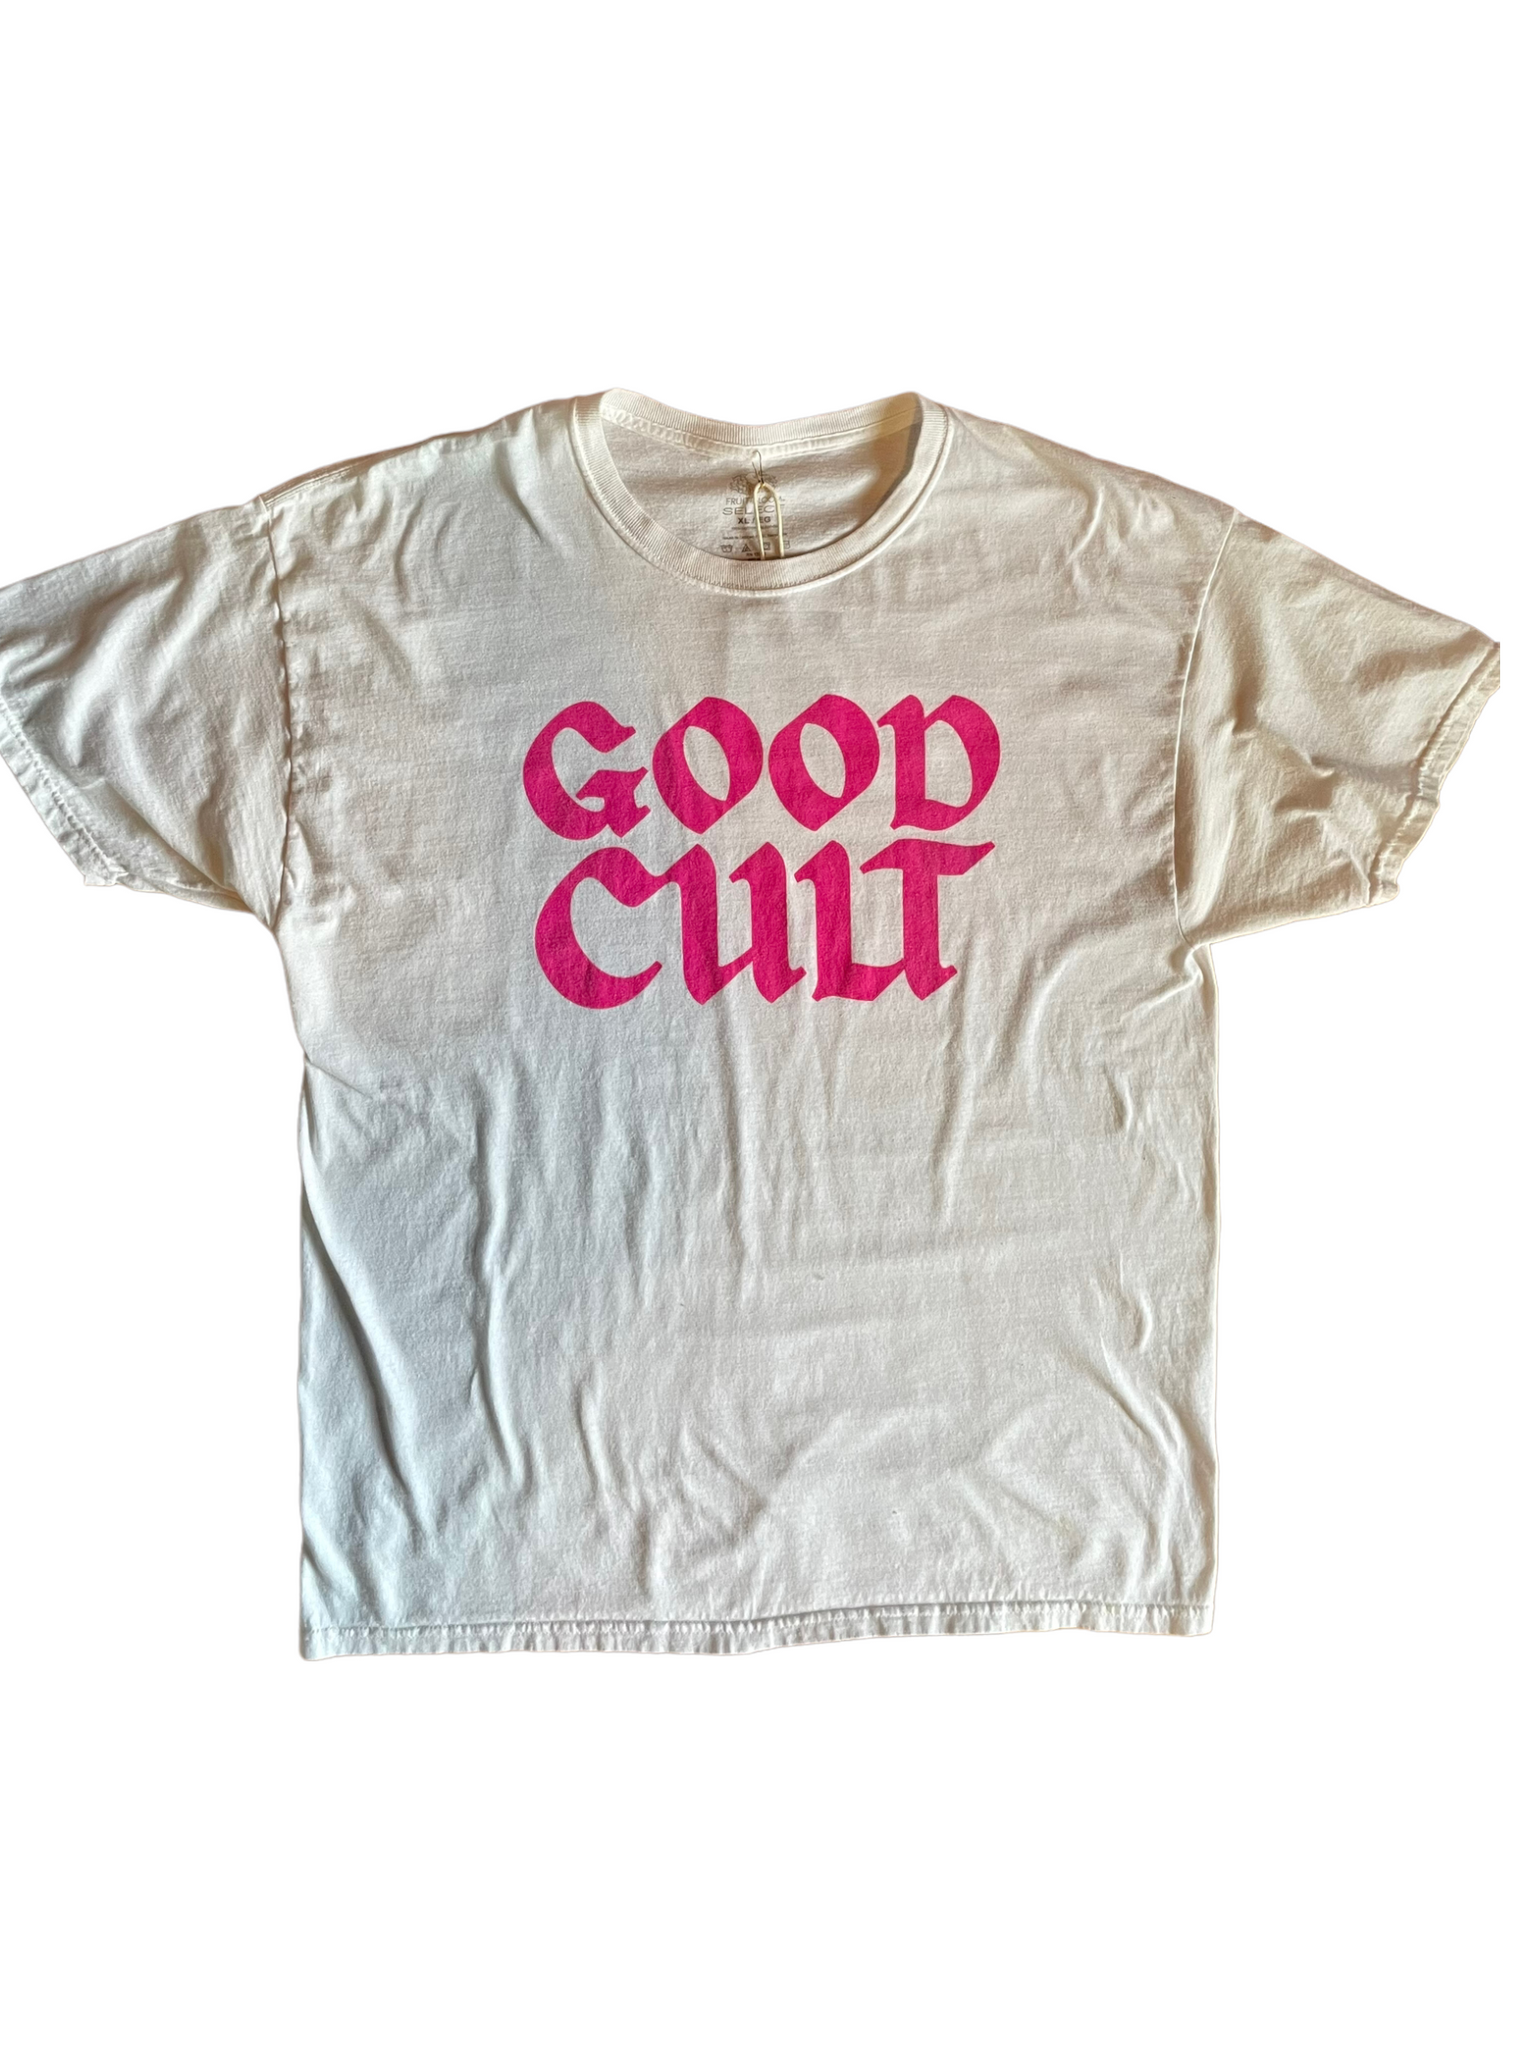 GC T-Shirt XL